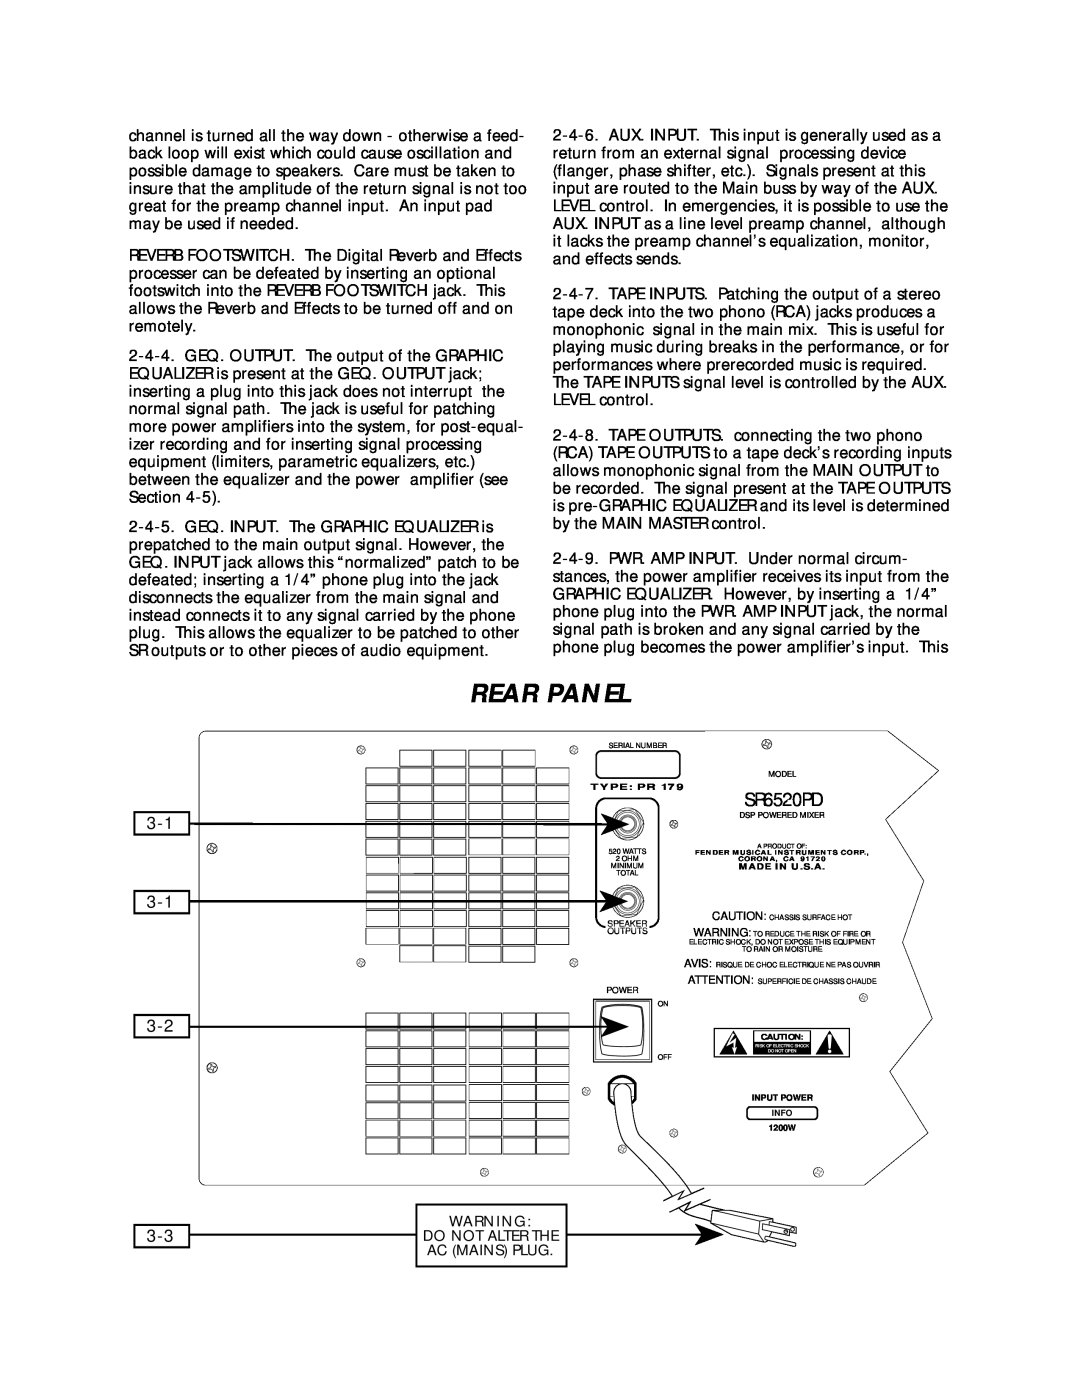 Fender SR-6520PD, SR-8520PD owner manual Rear Panel 